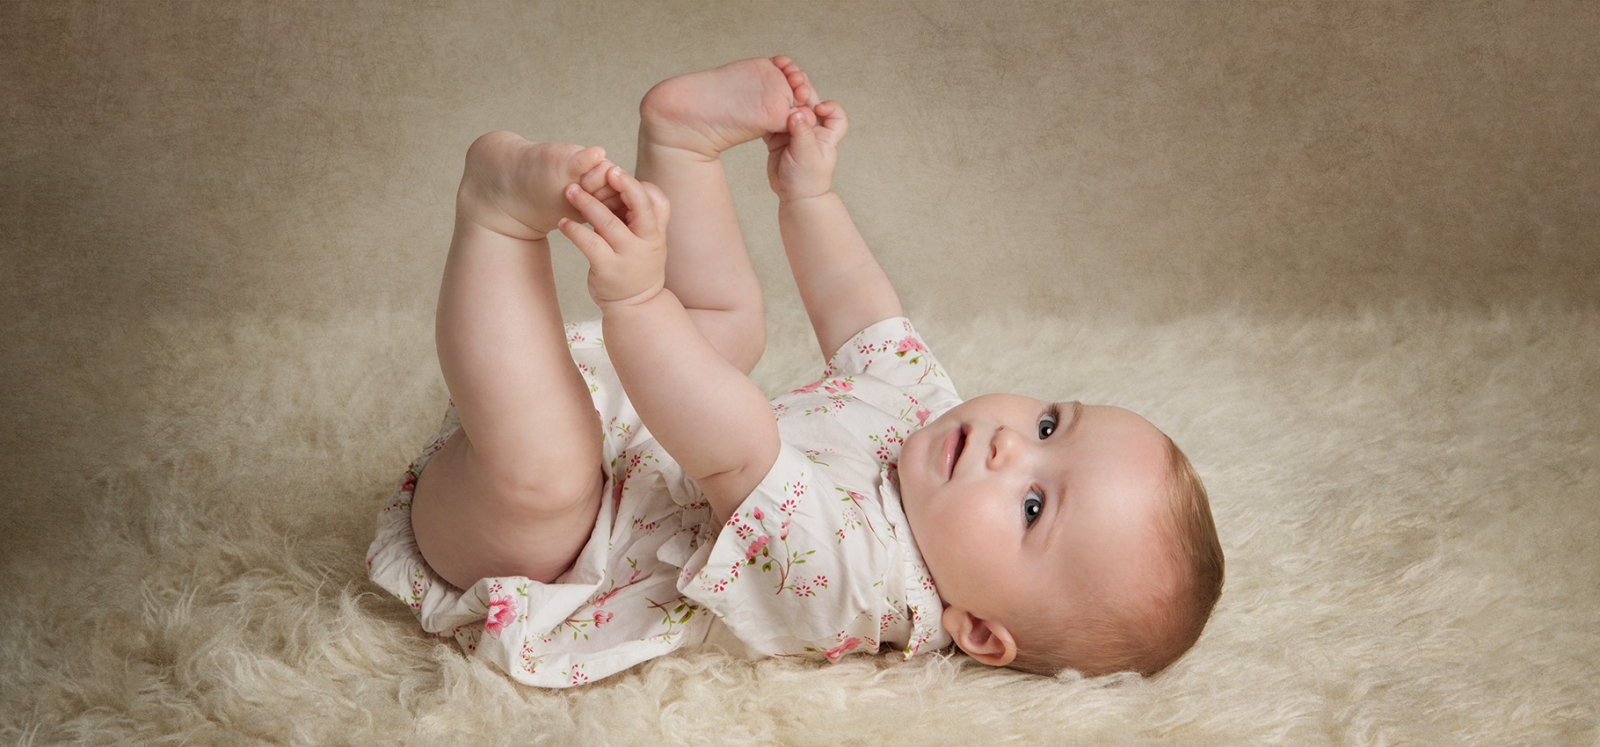 Baby Development: Grabbing Toes